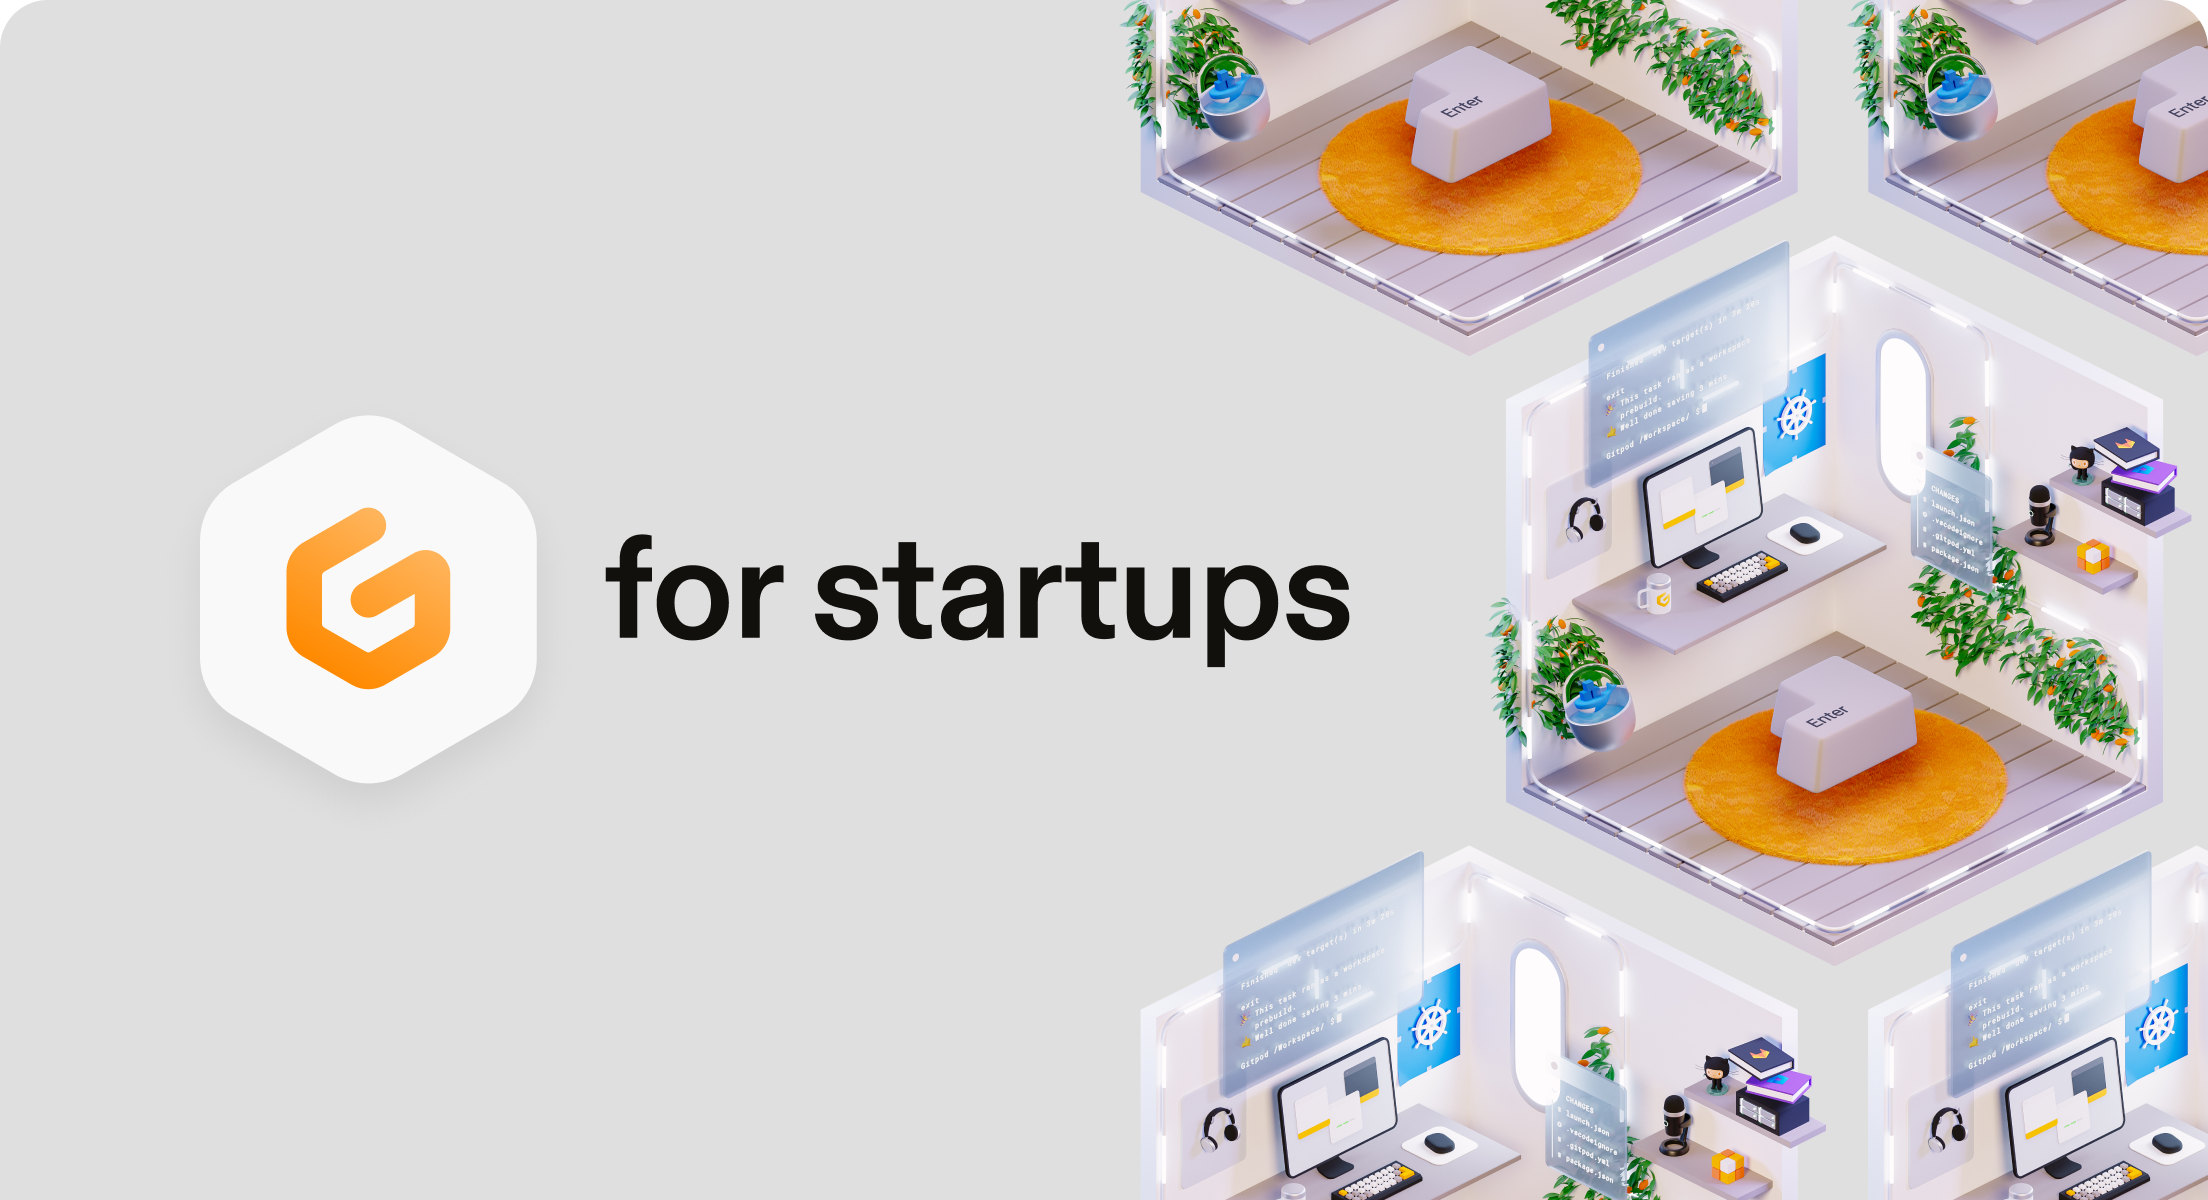 Introducing Gitpod for Startups